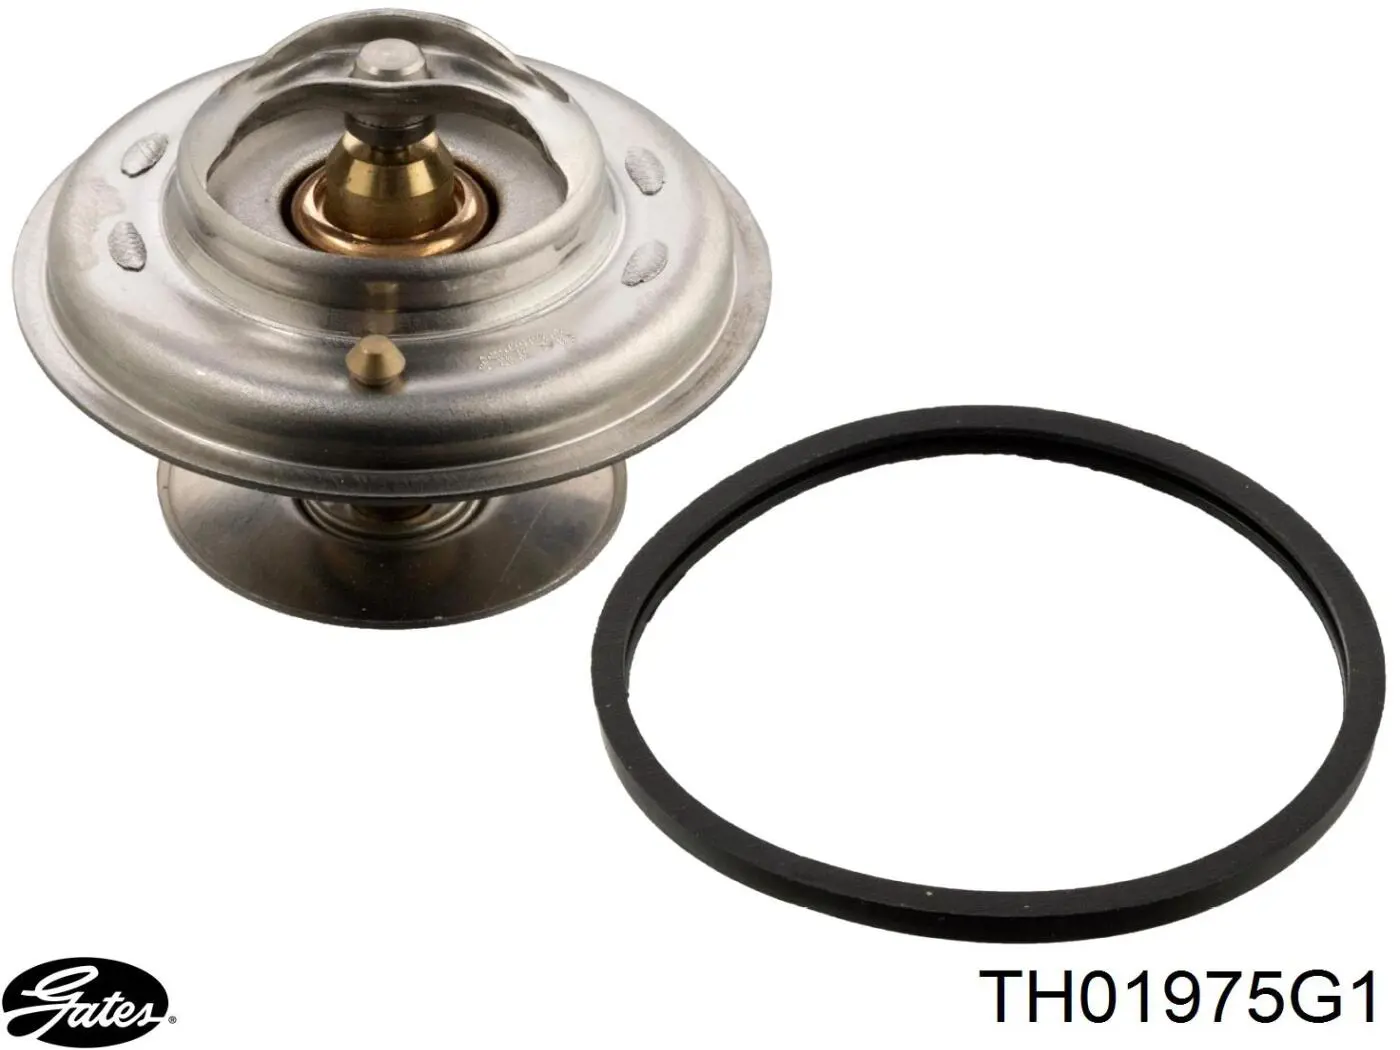 TH01975G1 Gates termostato